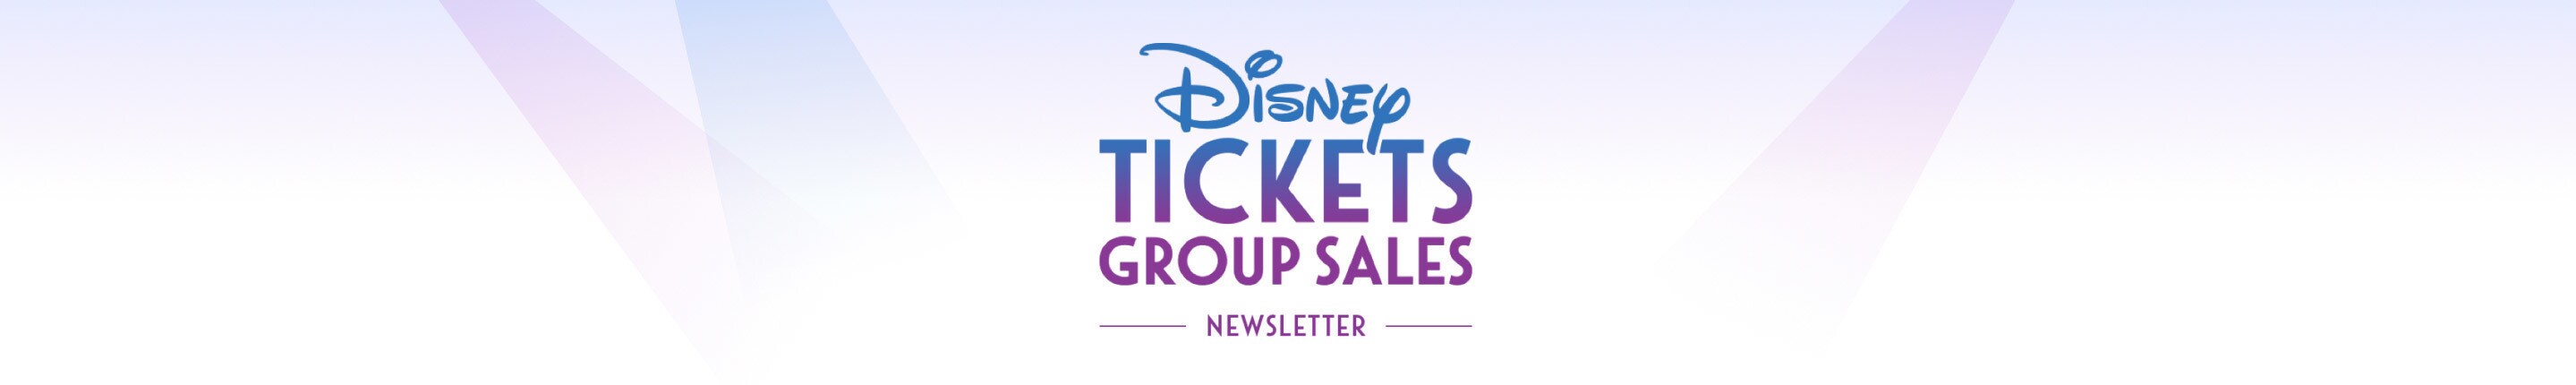 Disney Tickets Group Sales Newsletter